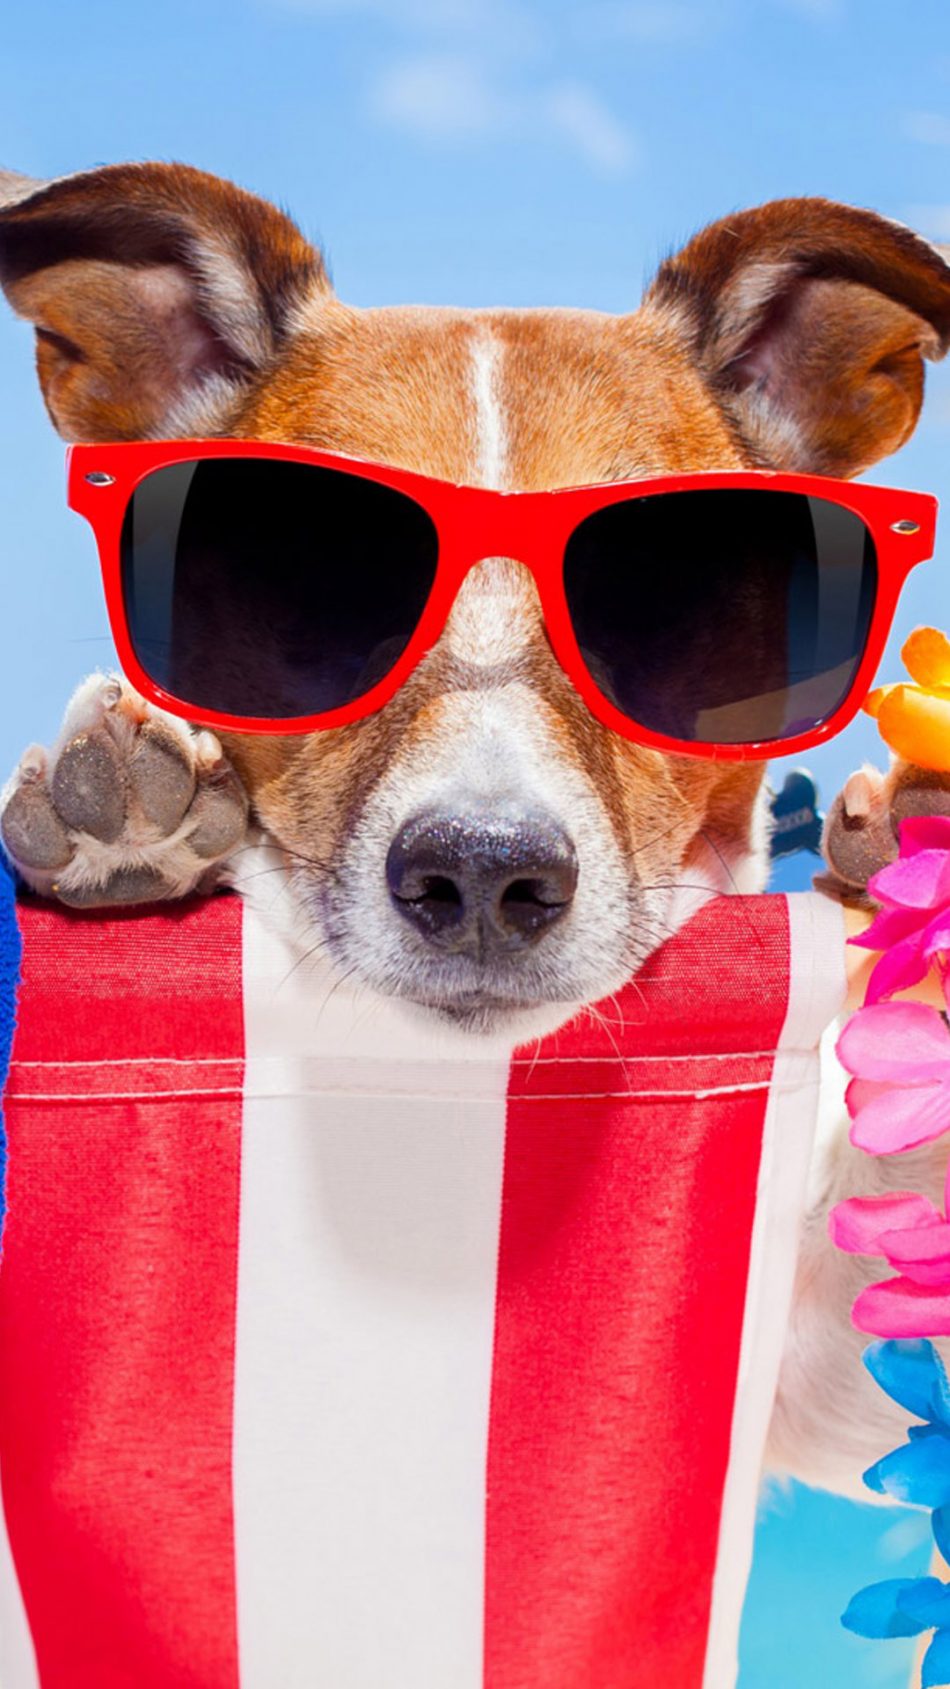 Dog Fun Sunglasses 4k Ultra HD Mobile Wallpaper